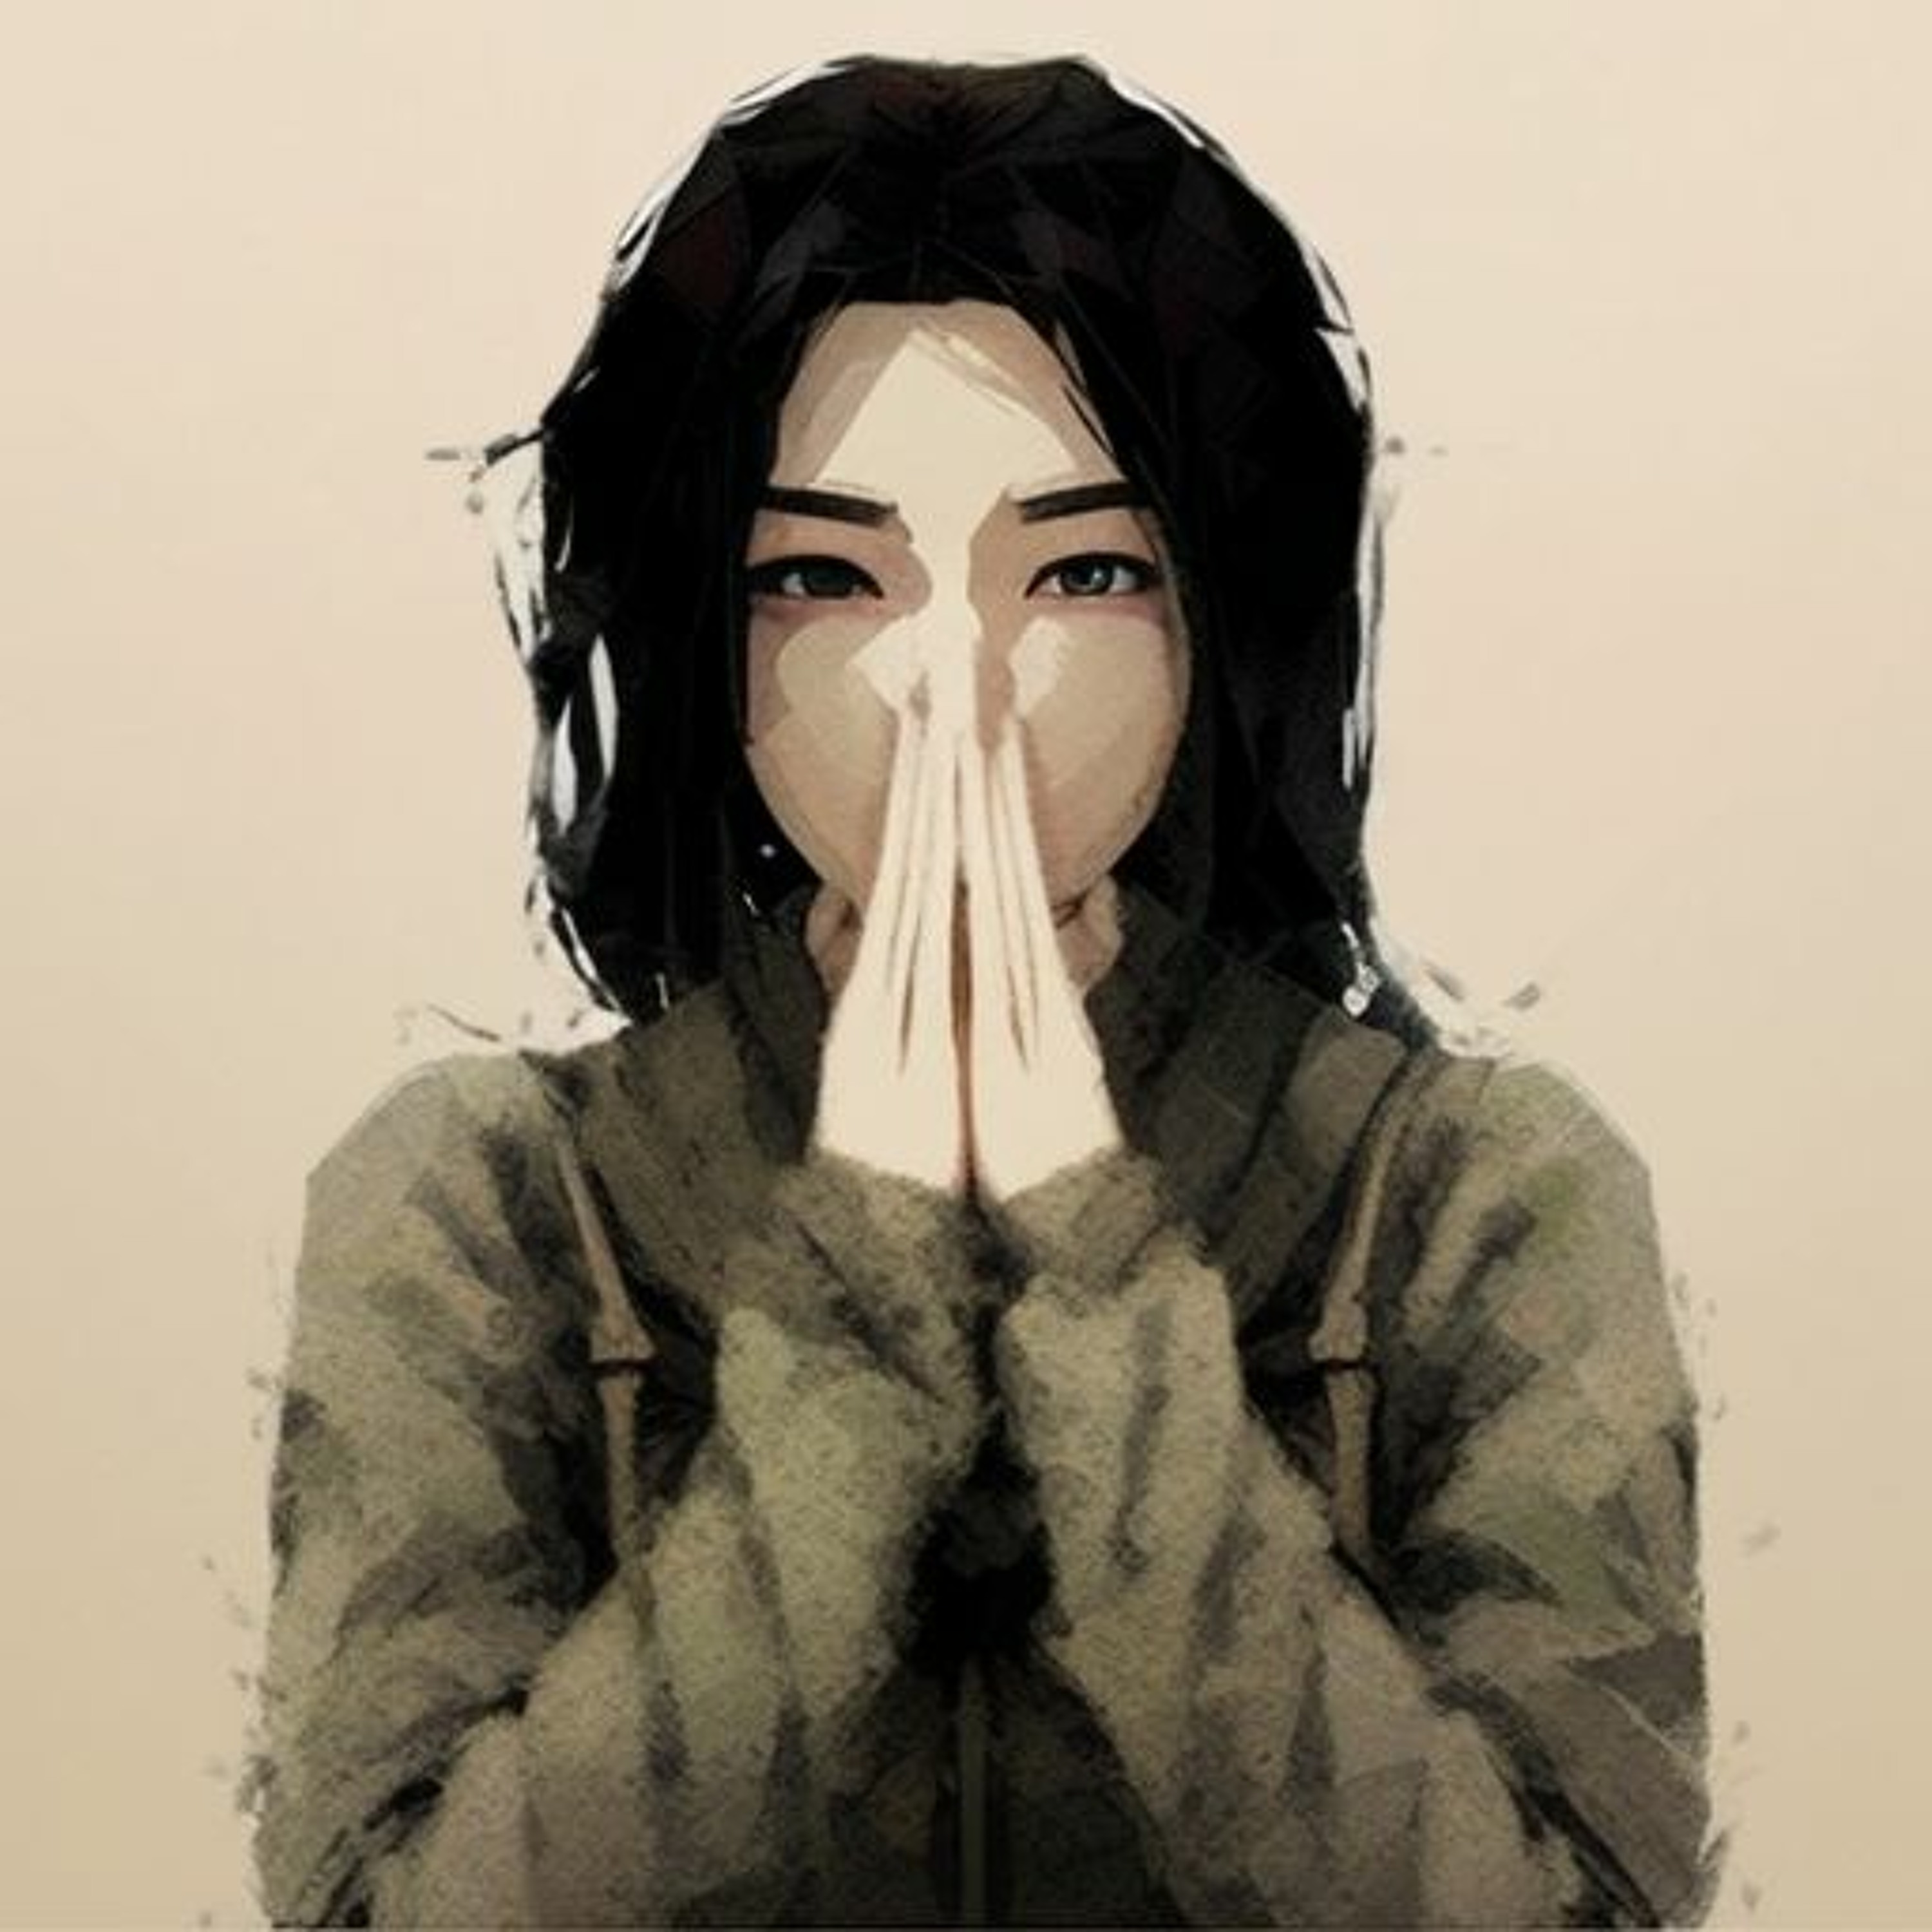 76 - Björk ”Human Behavior” (Aug 1993)